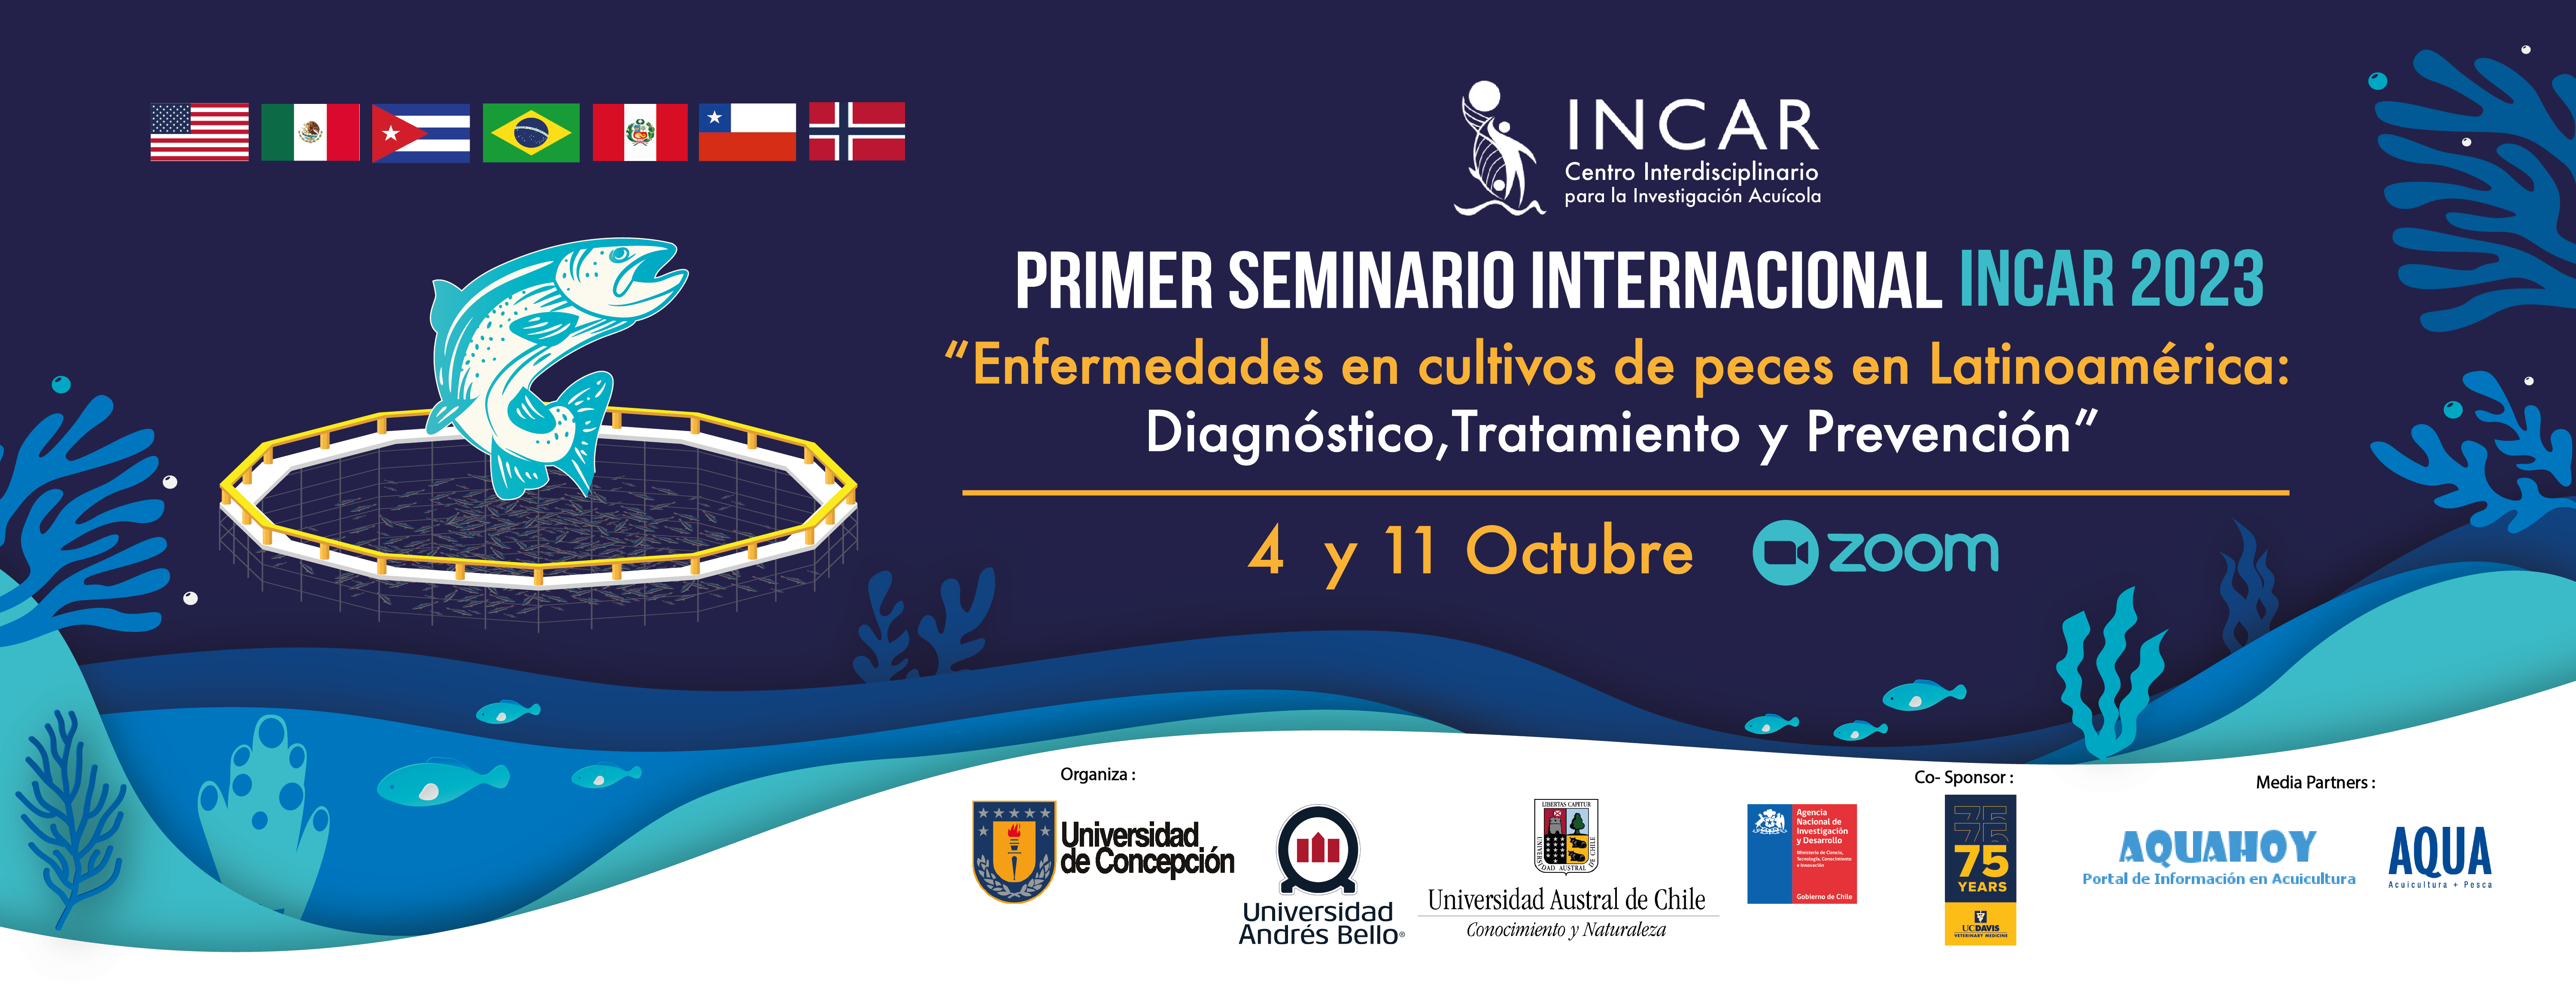 Incar organiza seminario internacional sobre enfermedades de peces cultivados en Latinoamérica